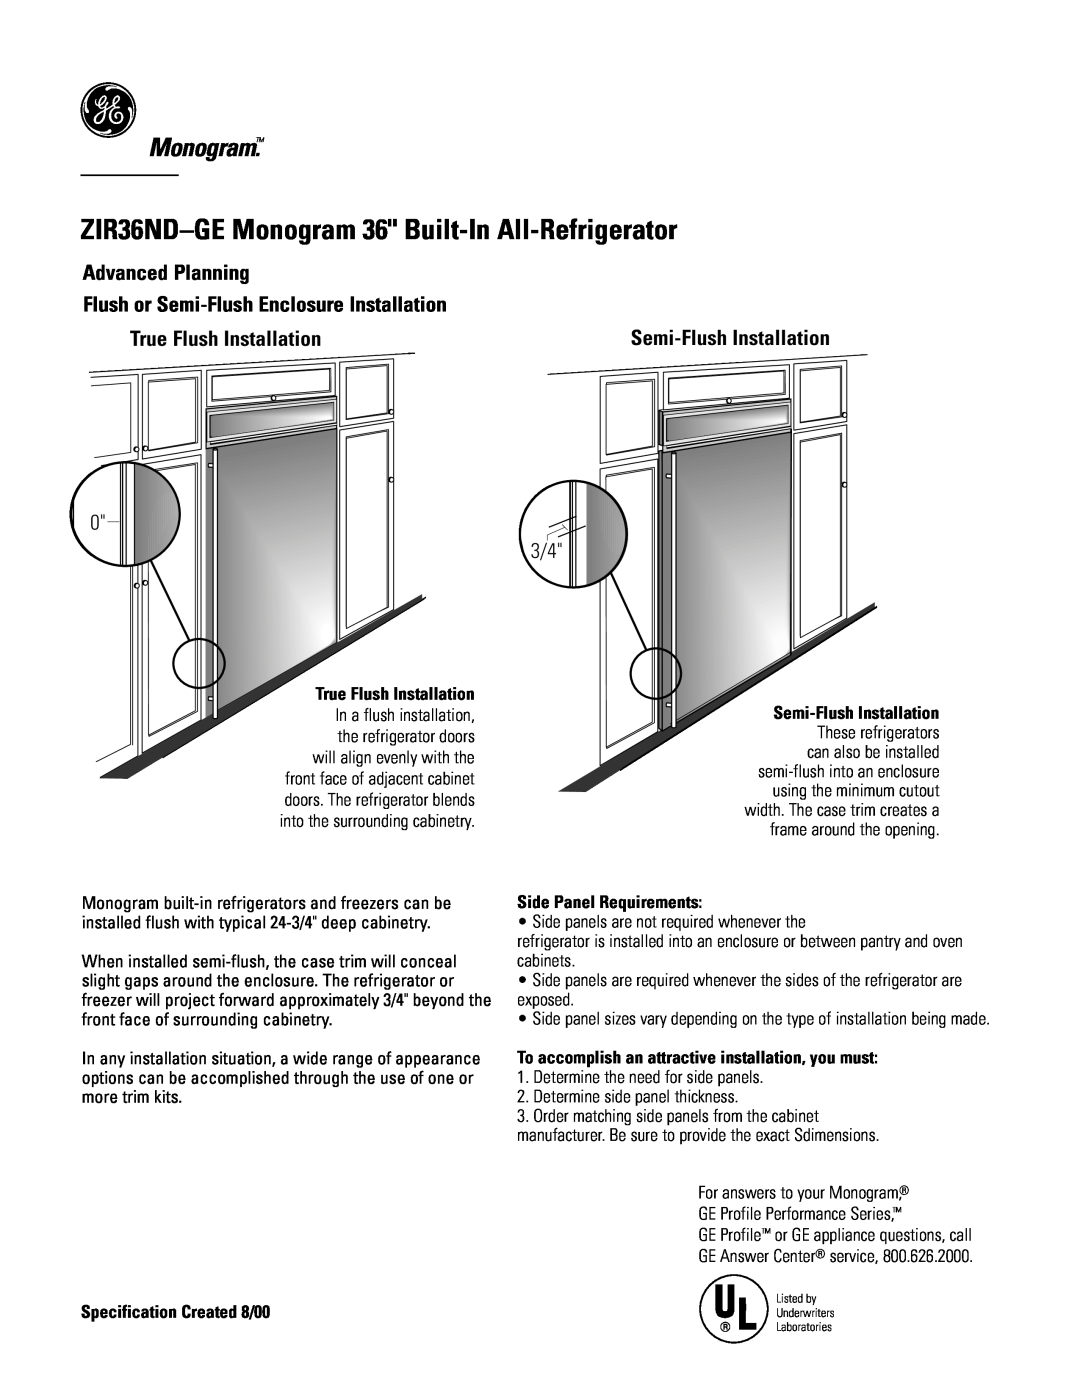 GE Monogram ZIR36NDGE ZIR36ND-GEMonogram 36 Built-In All-Refrigerator, Advanced Planning, True Flush Installation 